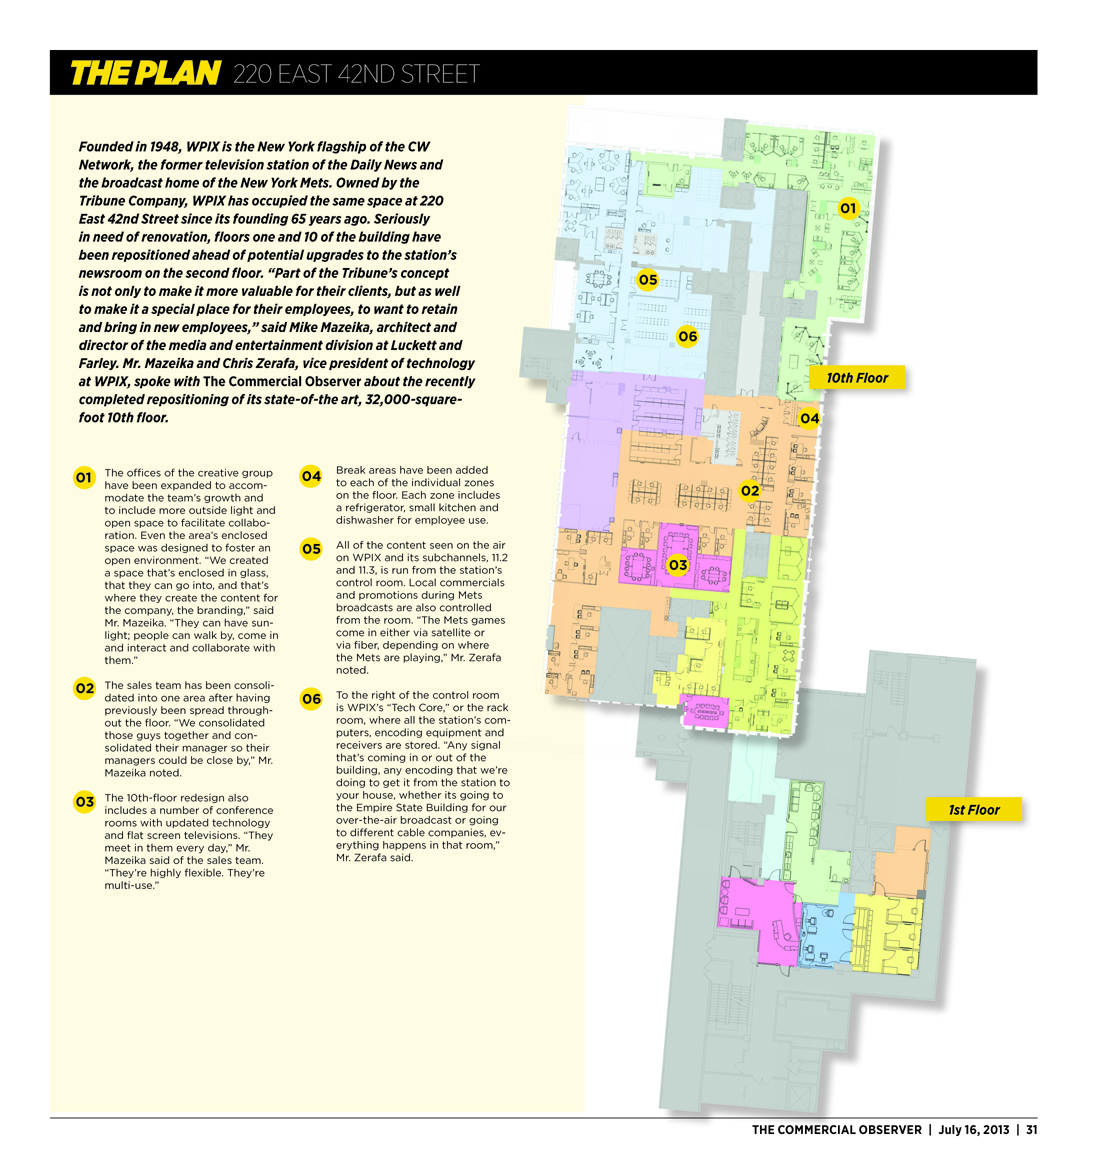 plan The Modernization of the WPIX Building